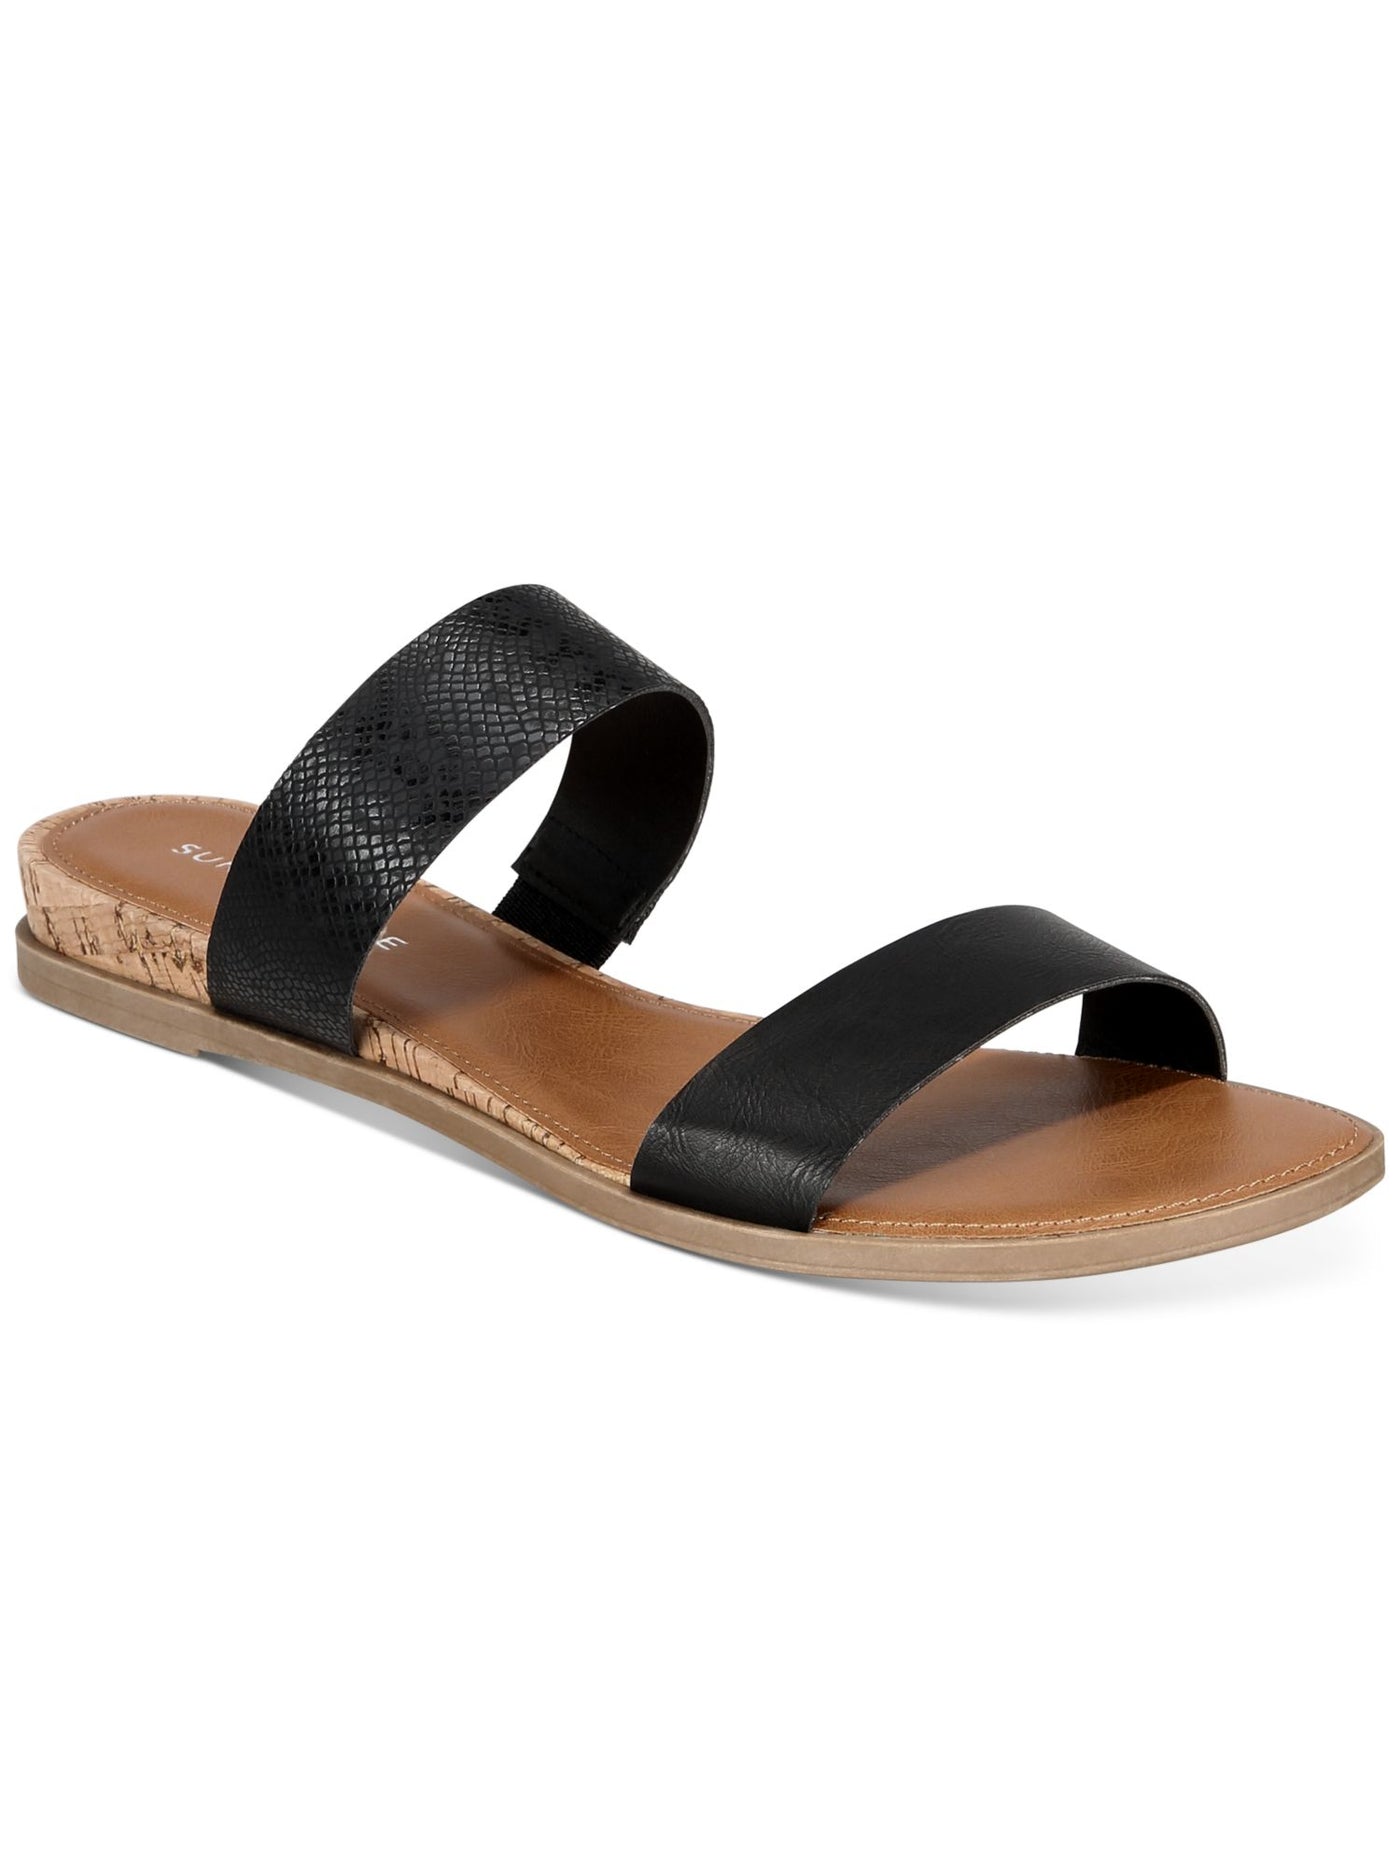 SUN STONE Womens Black Slip Resistant Comfort Easten Round Toe Wedge Slip On Slide Sandals Shoes 9 W